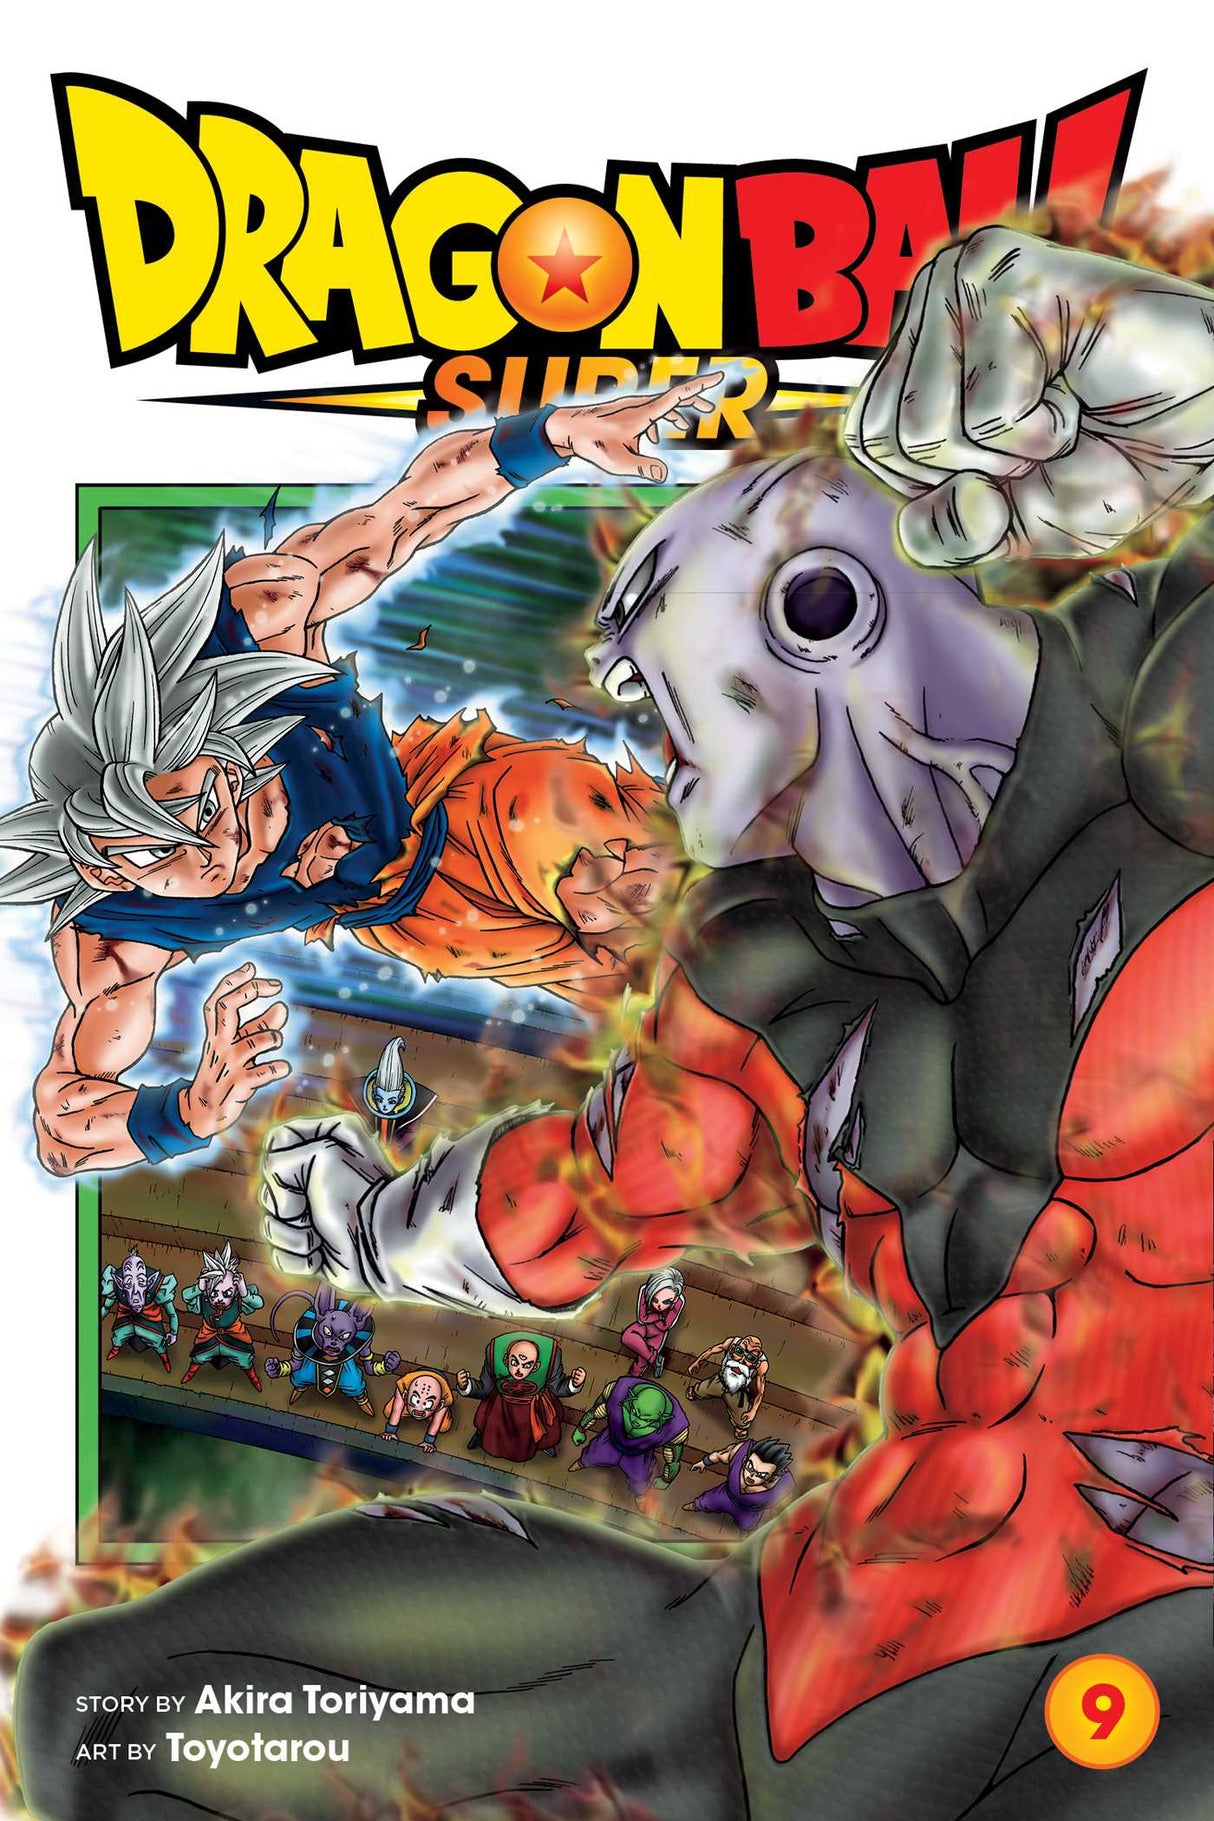 Cover image of the Manga Dragon Ball Super, Vol. 9